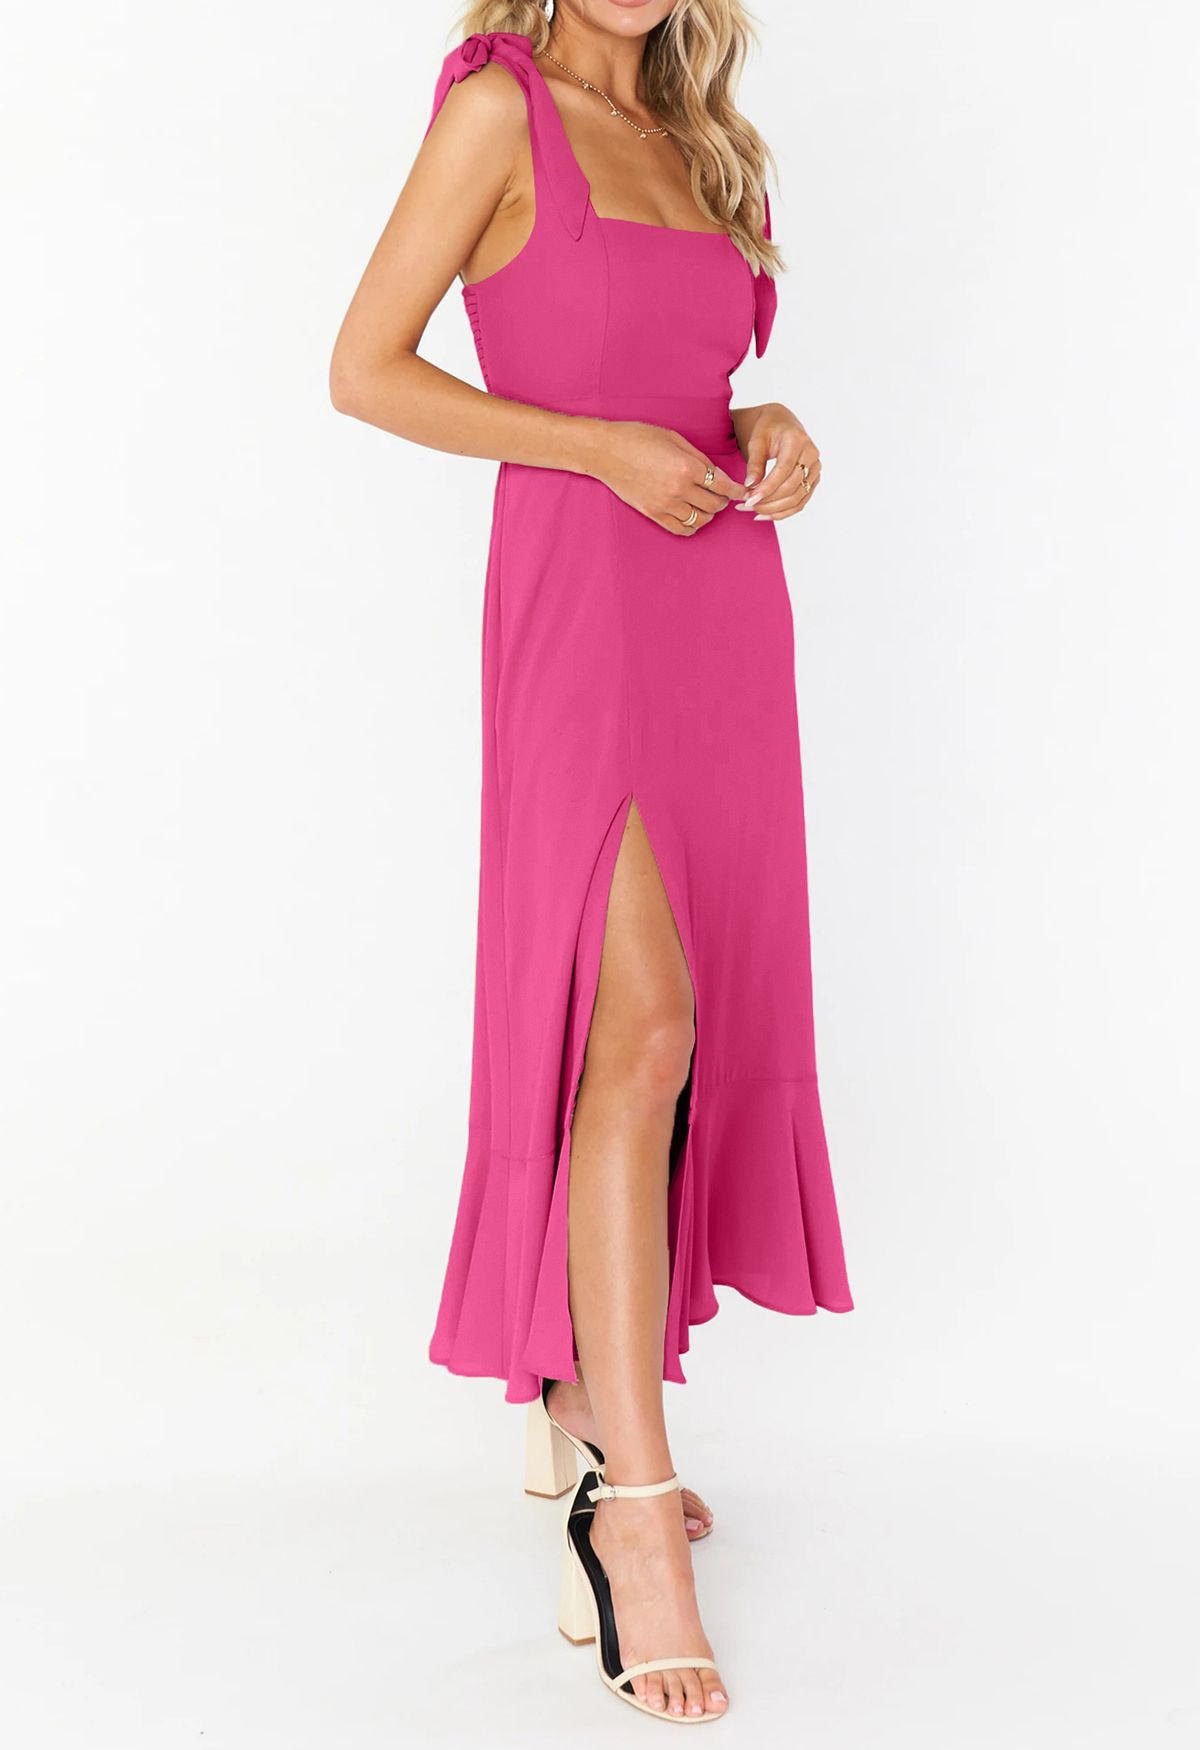 Ruffle Hem Tie-Shoulder Cami Dress in Hot Pink